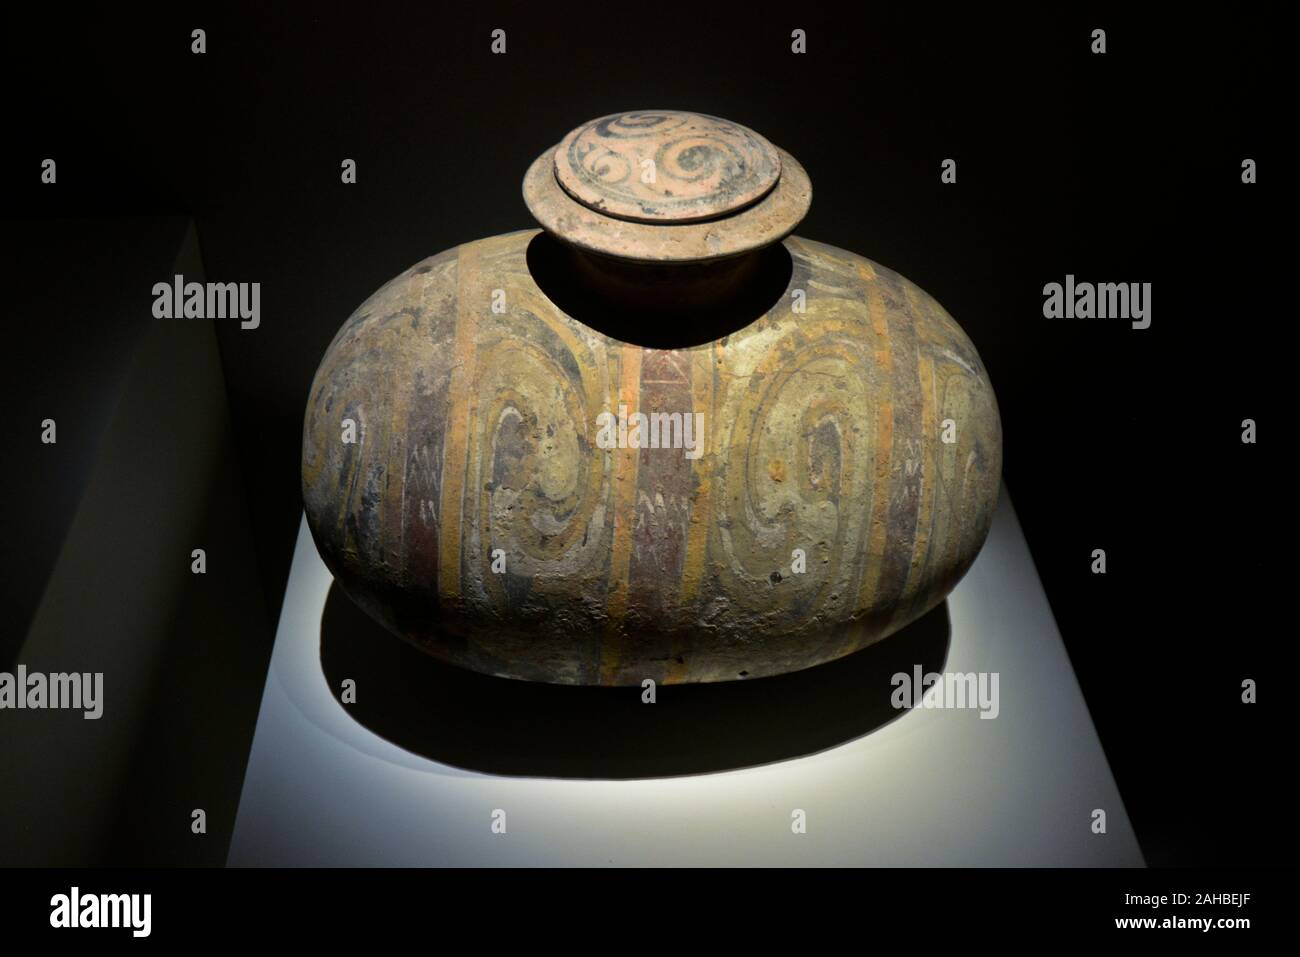 Ancient chinese ceramic. Wuhan Museum, China Stock Photo